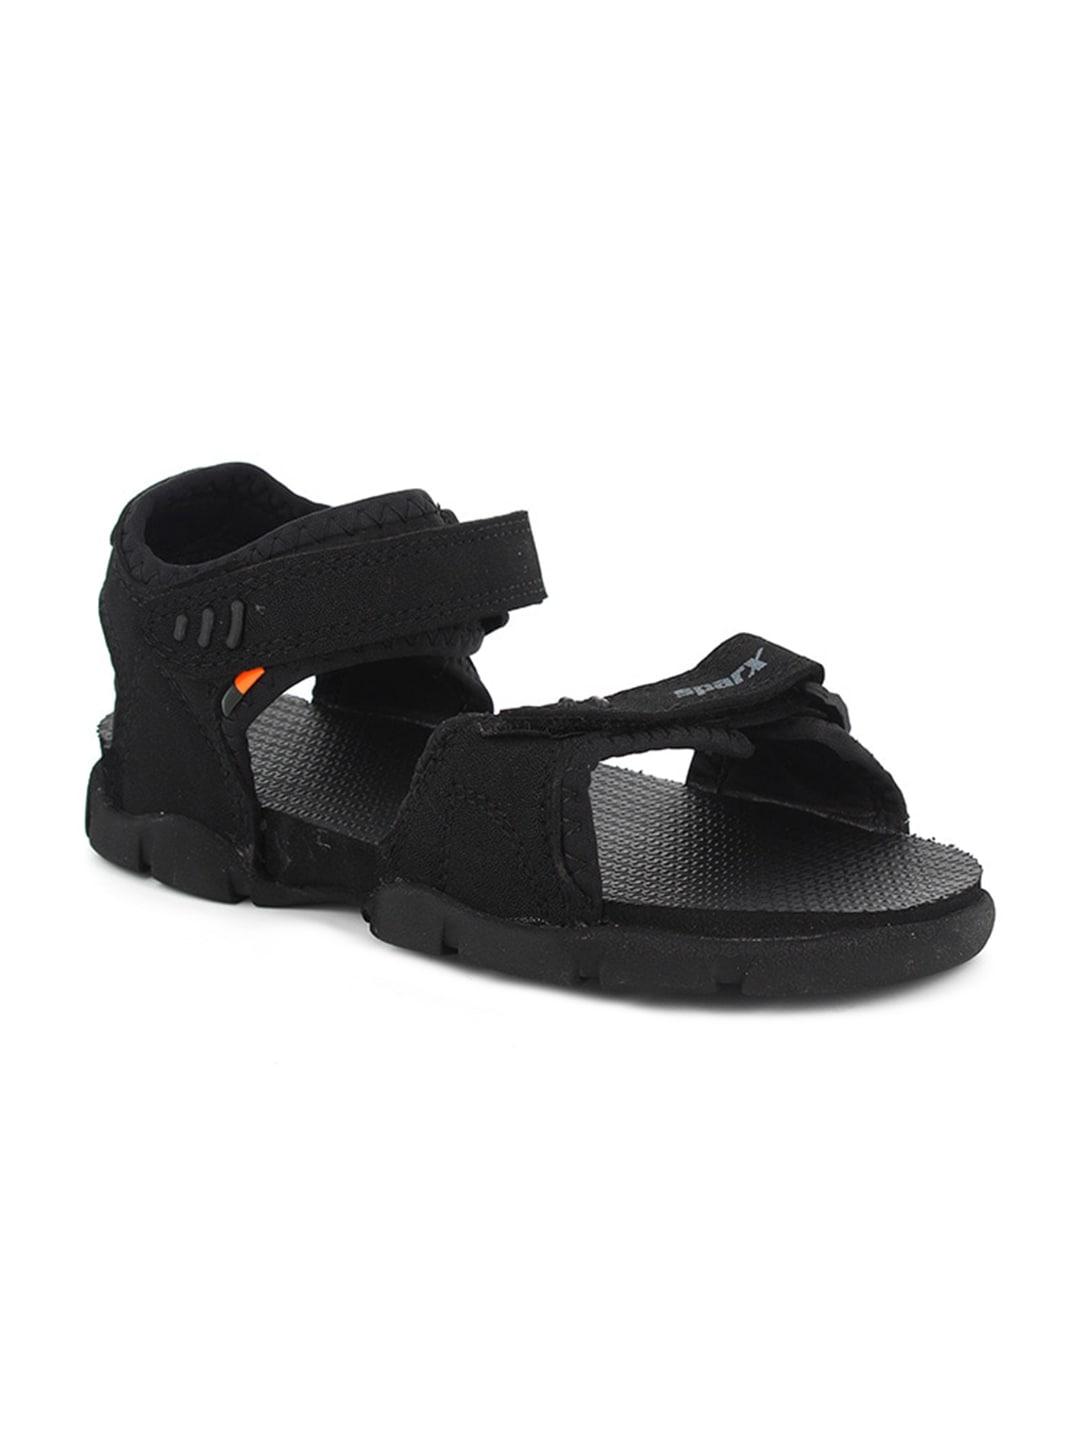 sparx-men-sports-sandals